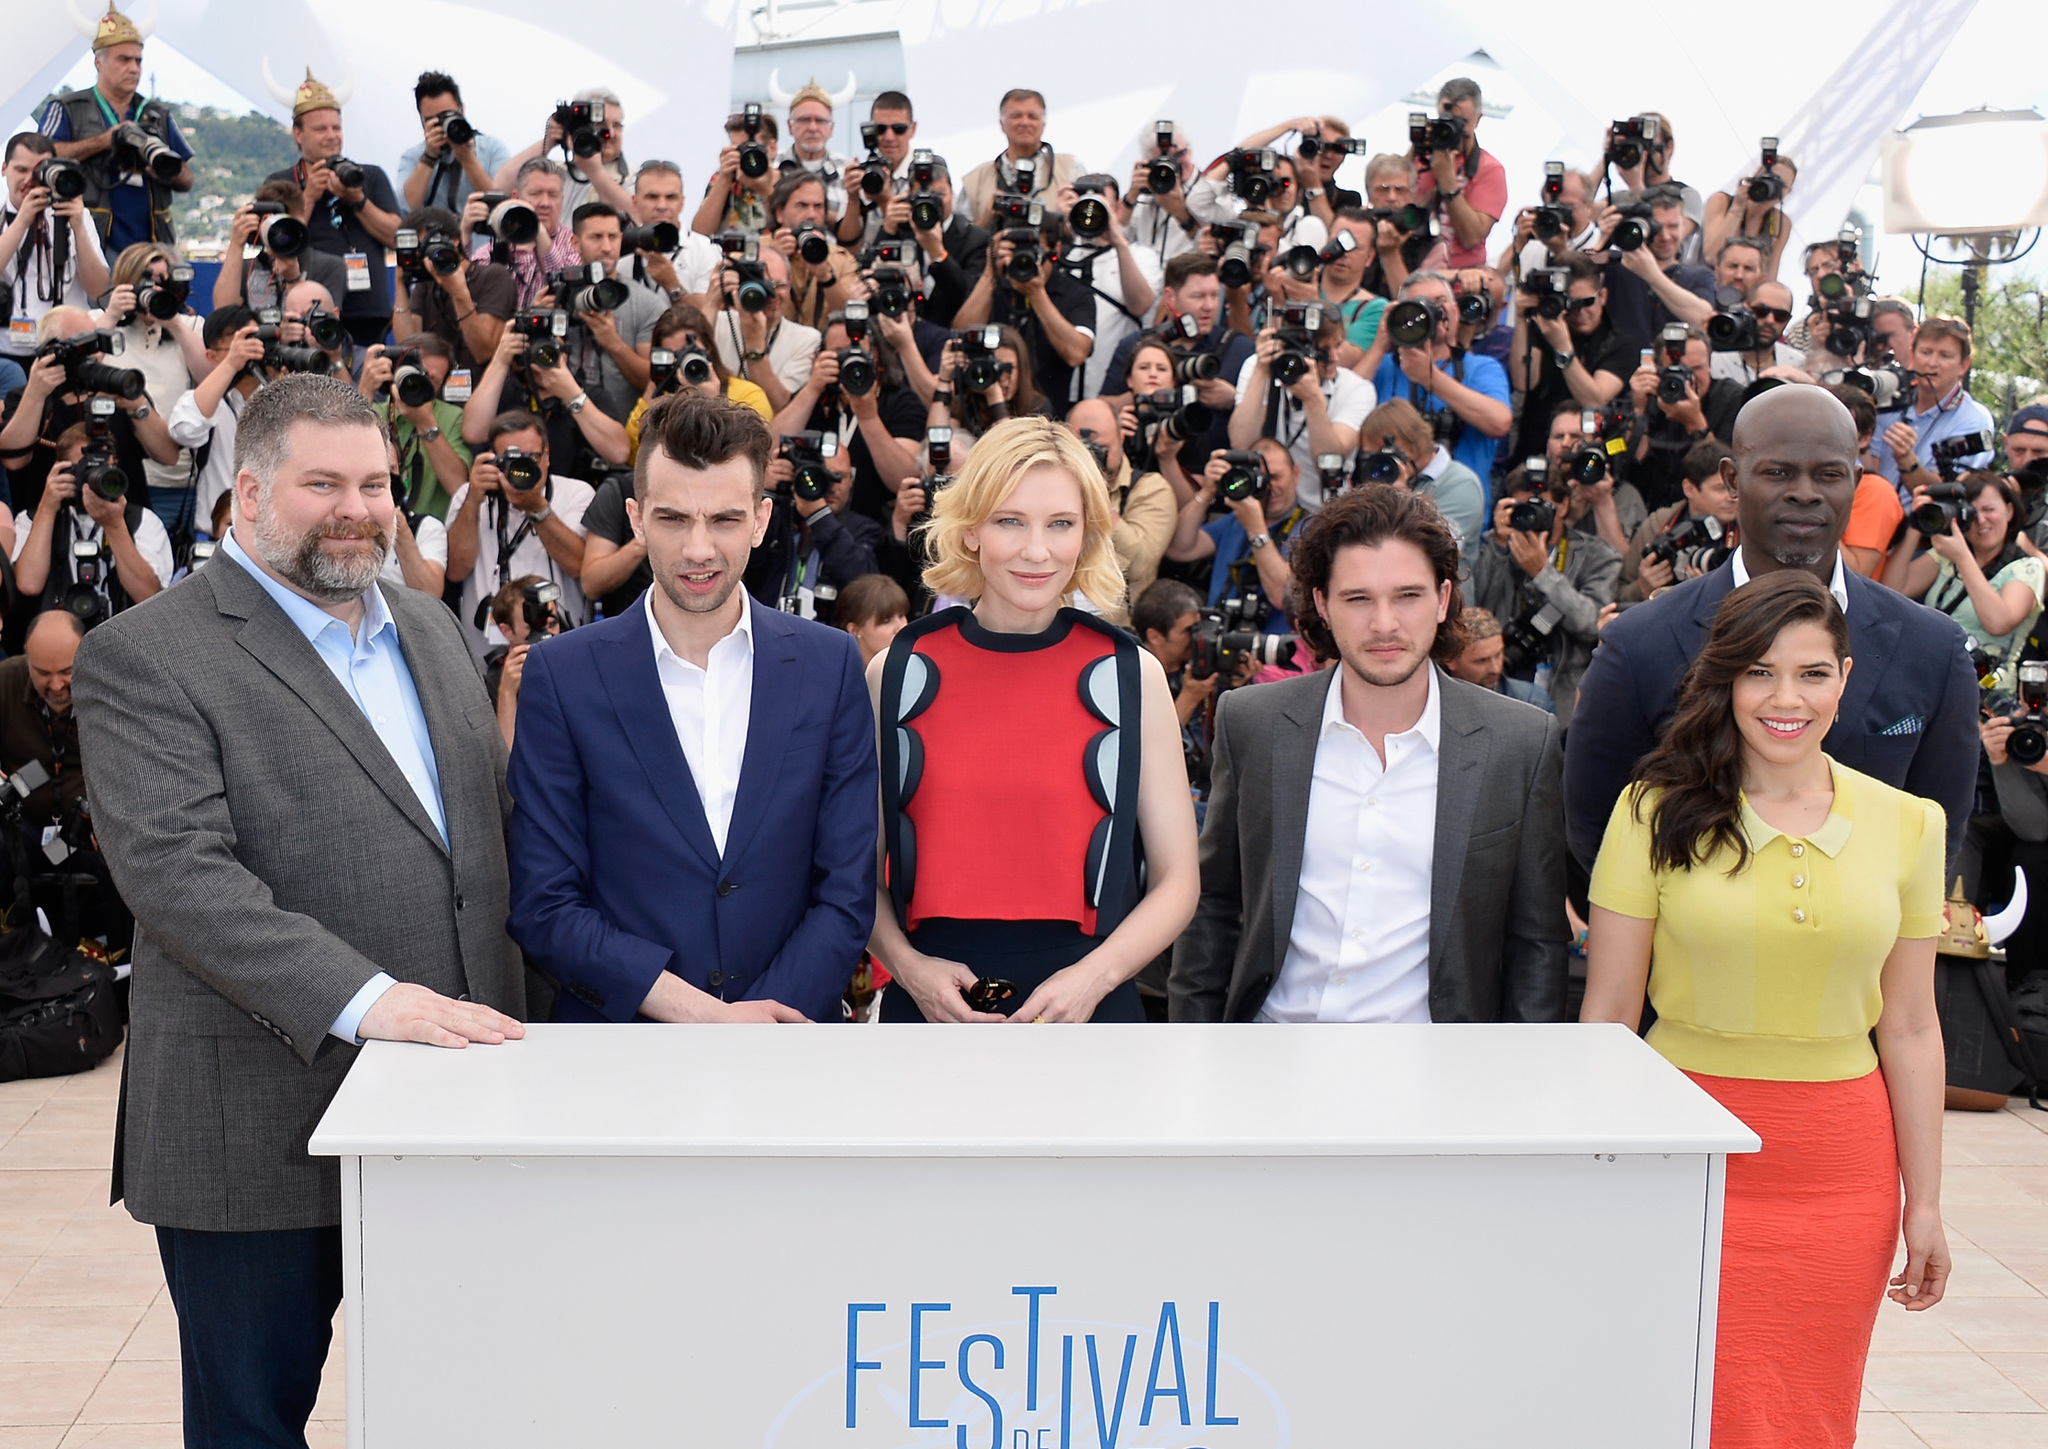 Cate Blanchett, Djimon Hounsou, Jay Baruchel, Dean DeBlois, America Ferrera and Kit Harington at event of Kaip prisijaukinti slibina 2 (2014)